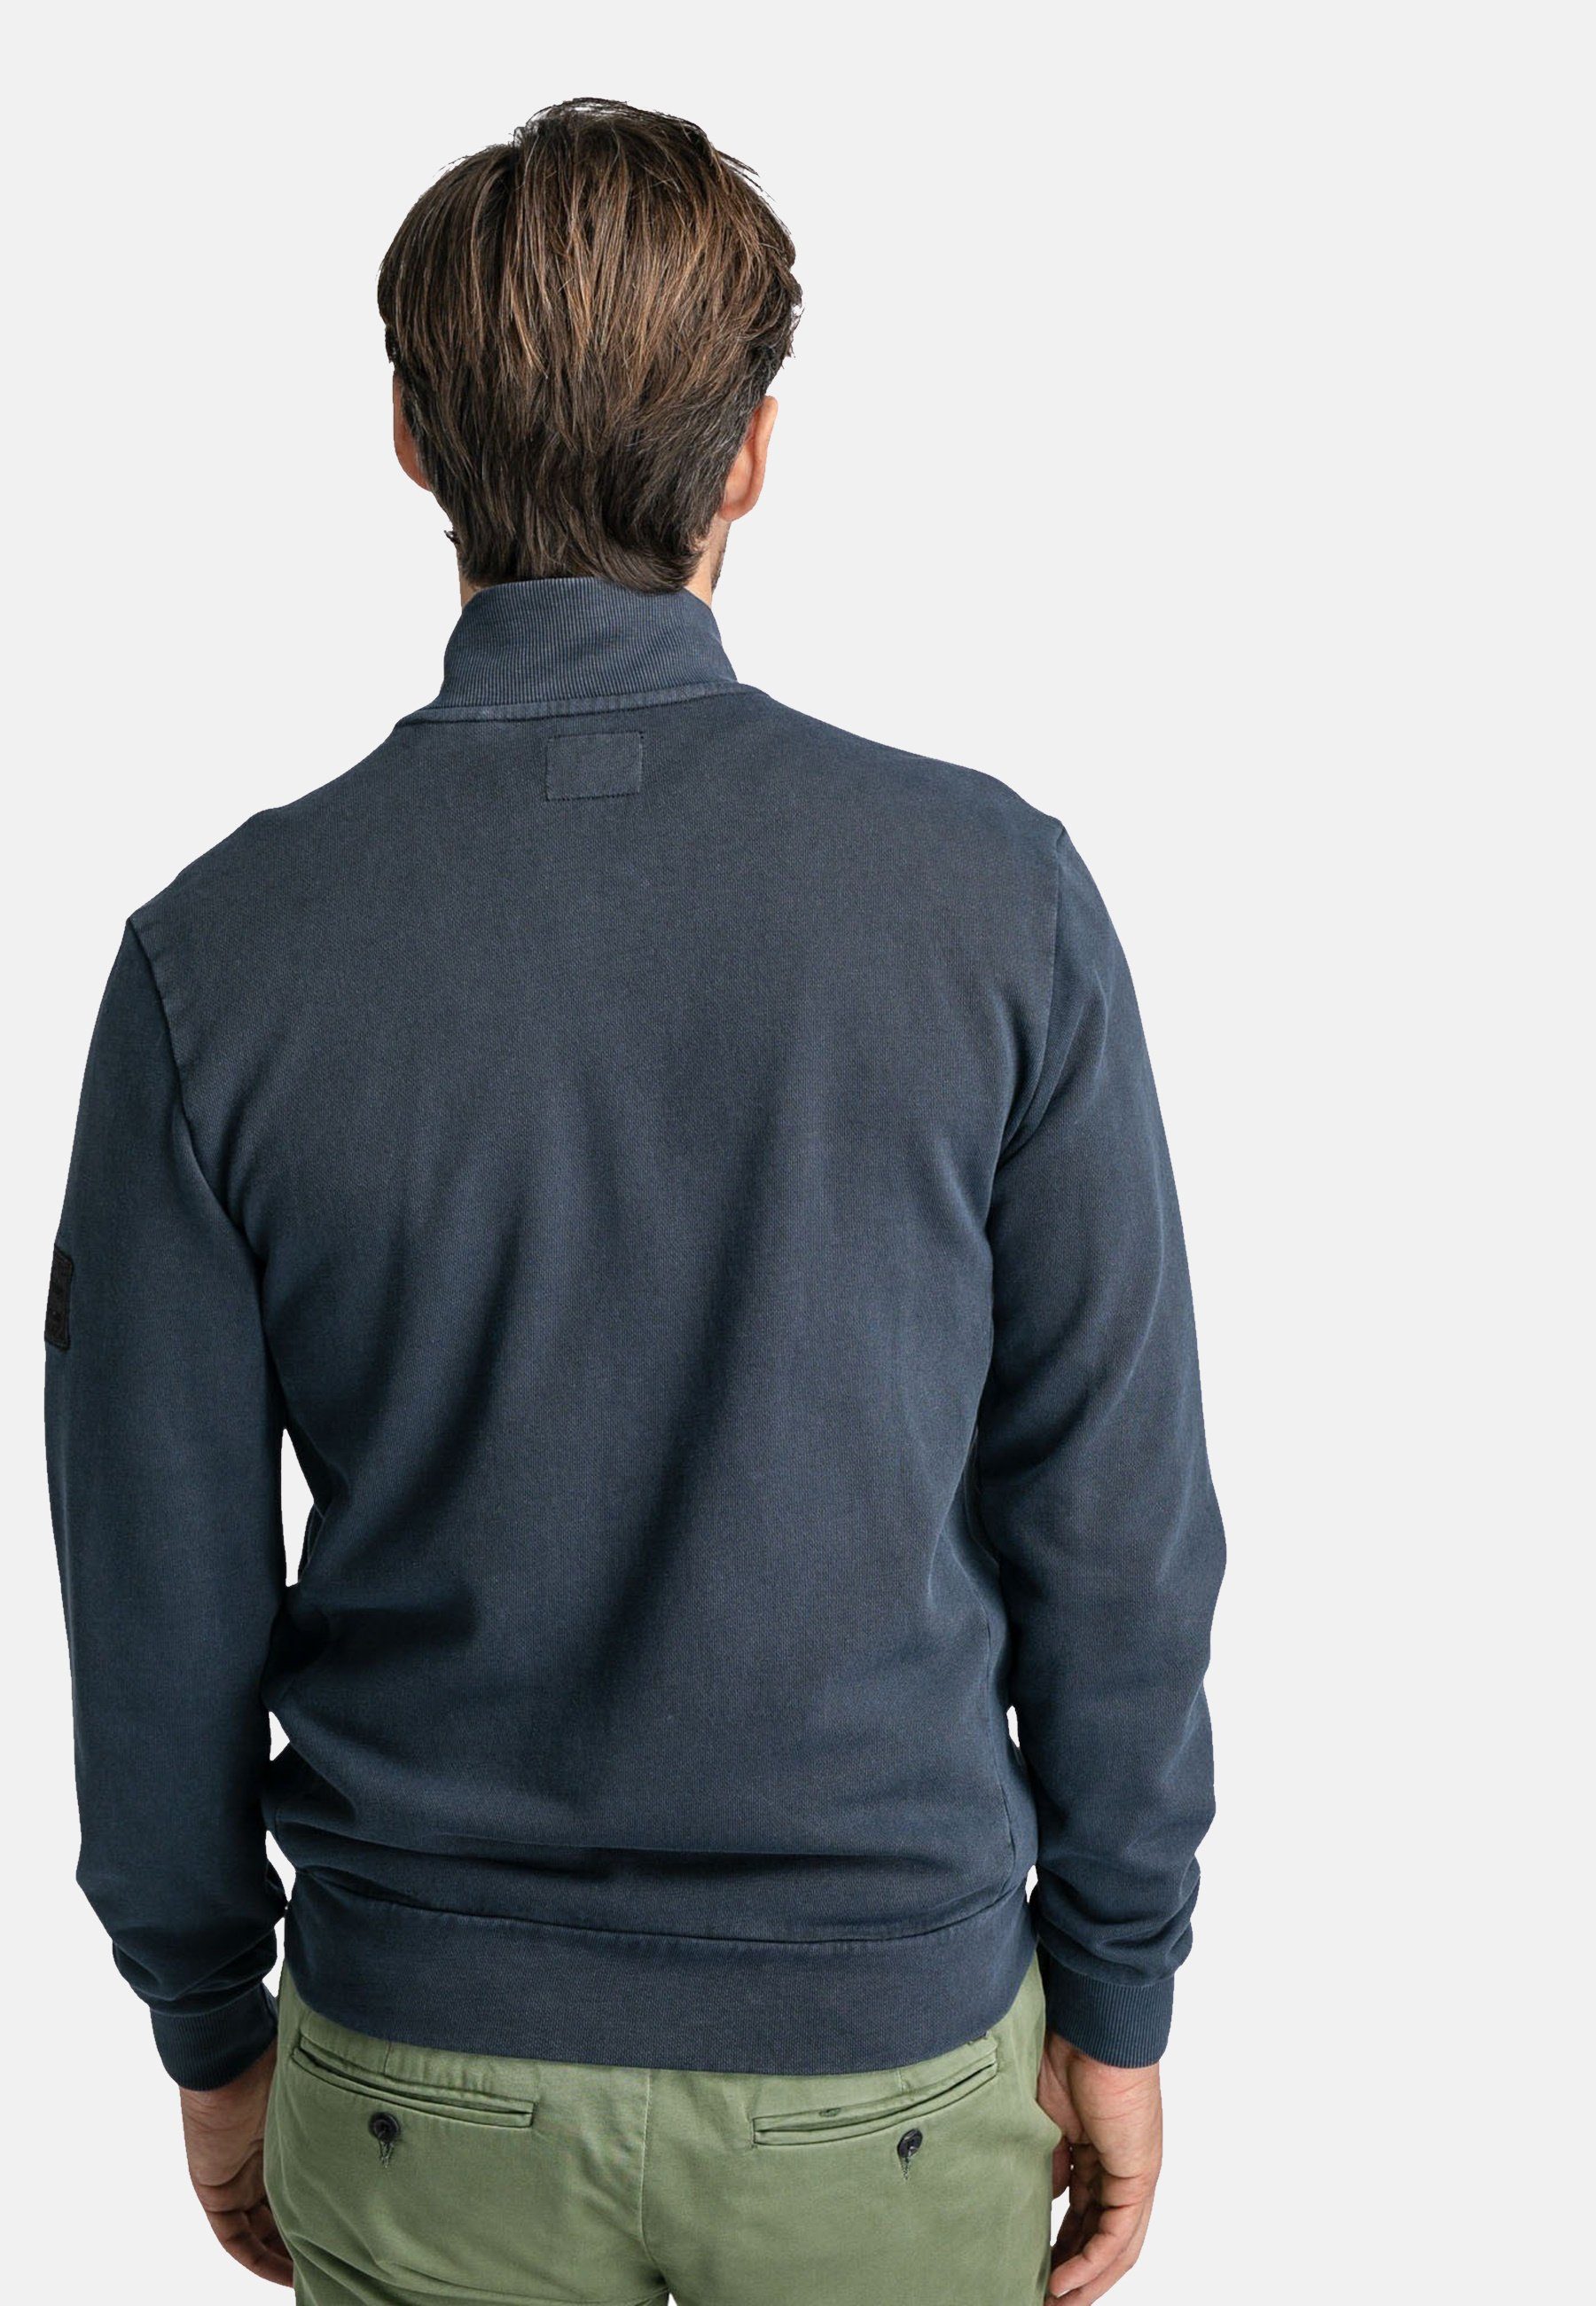 Petrol Industries Sweatjacke Sweatjacke Collar Jacke Sweater dunkelblau Reißverschluss mit